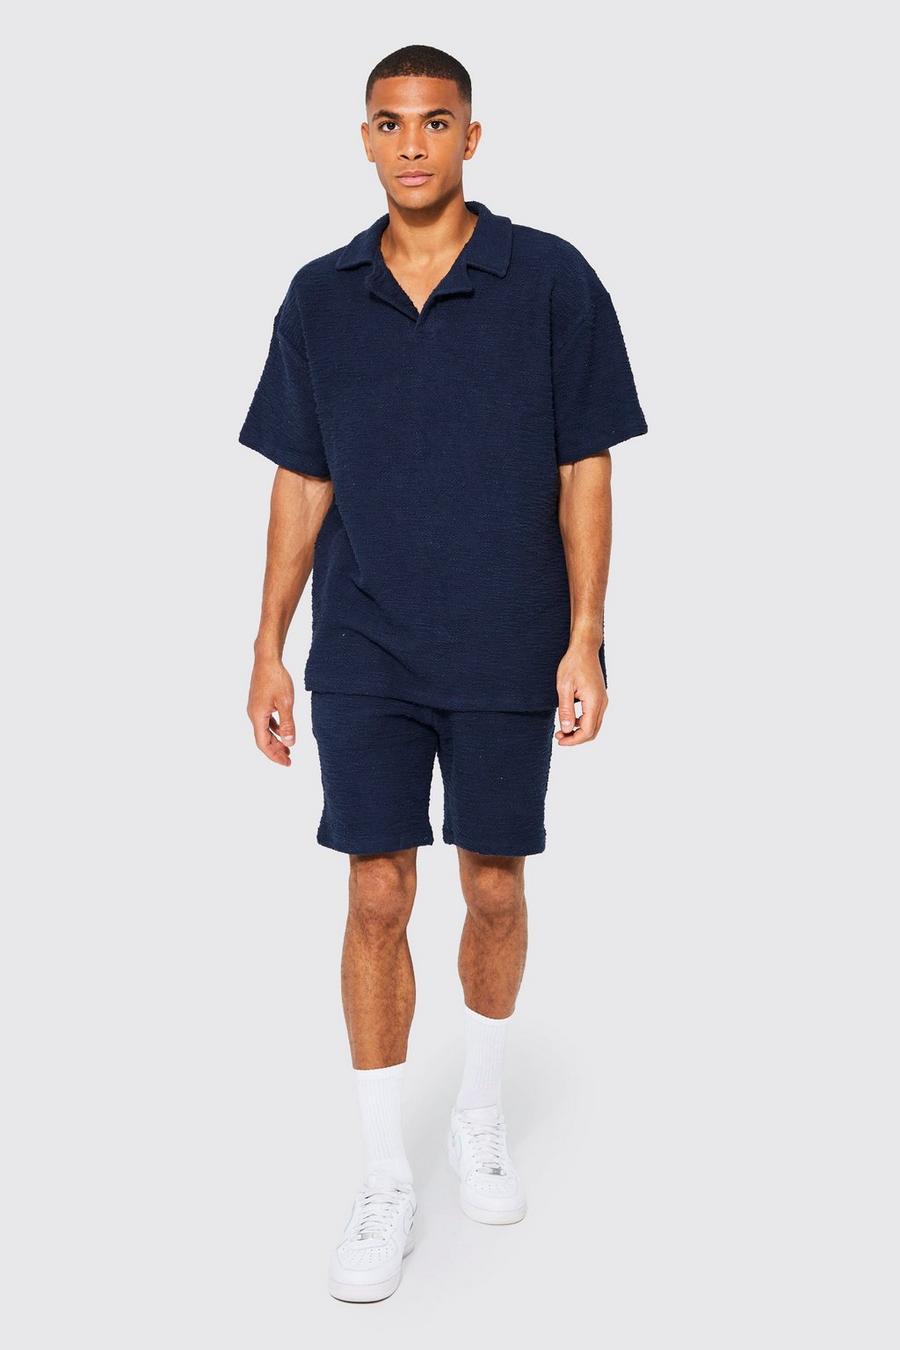 Strukturiertes Poloshirt und Shorts, Navy